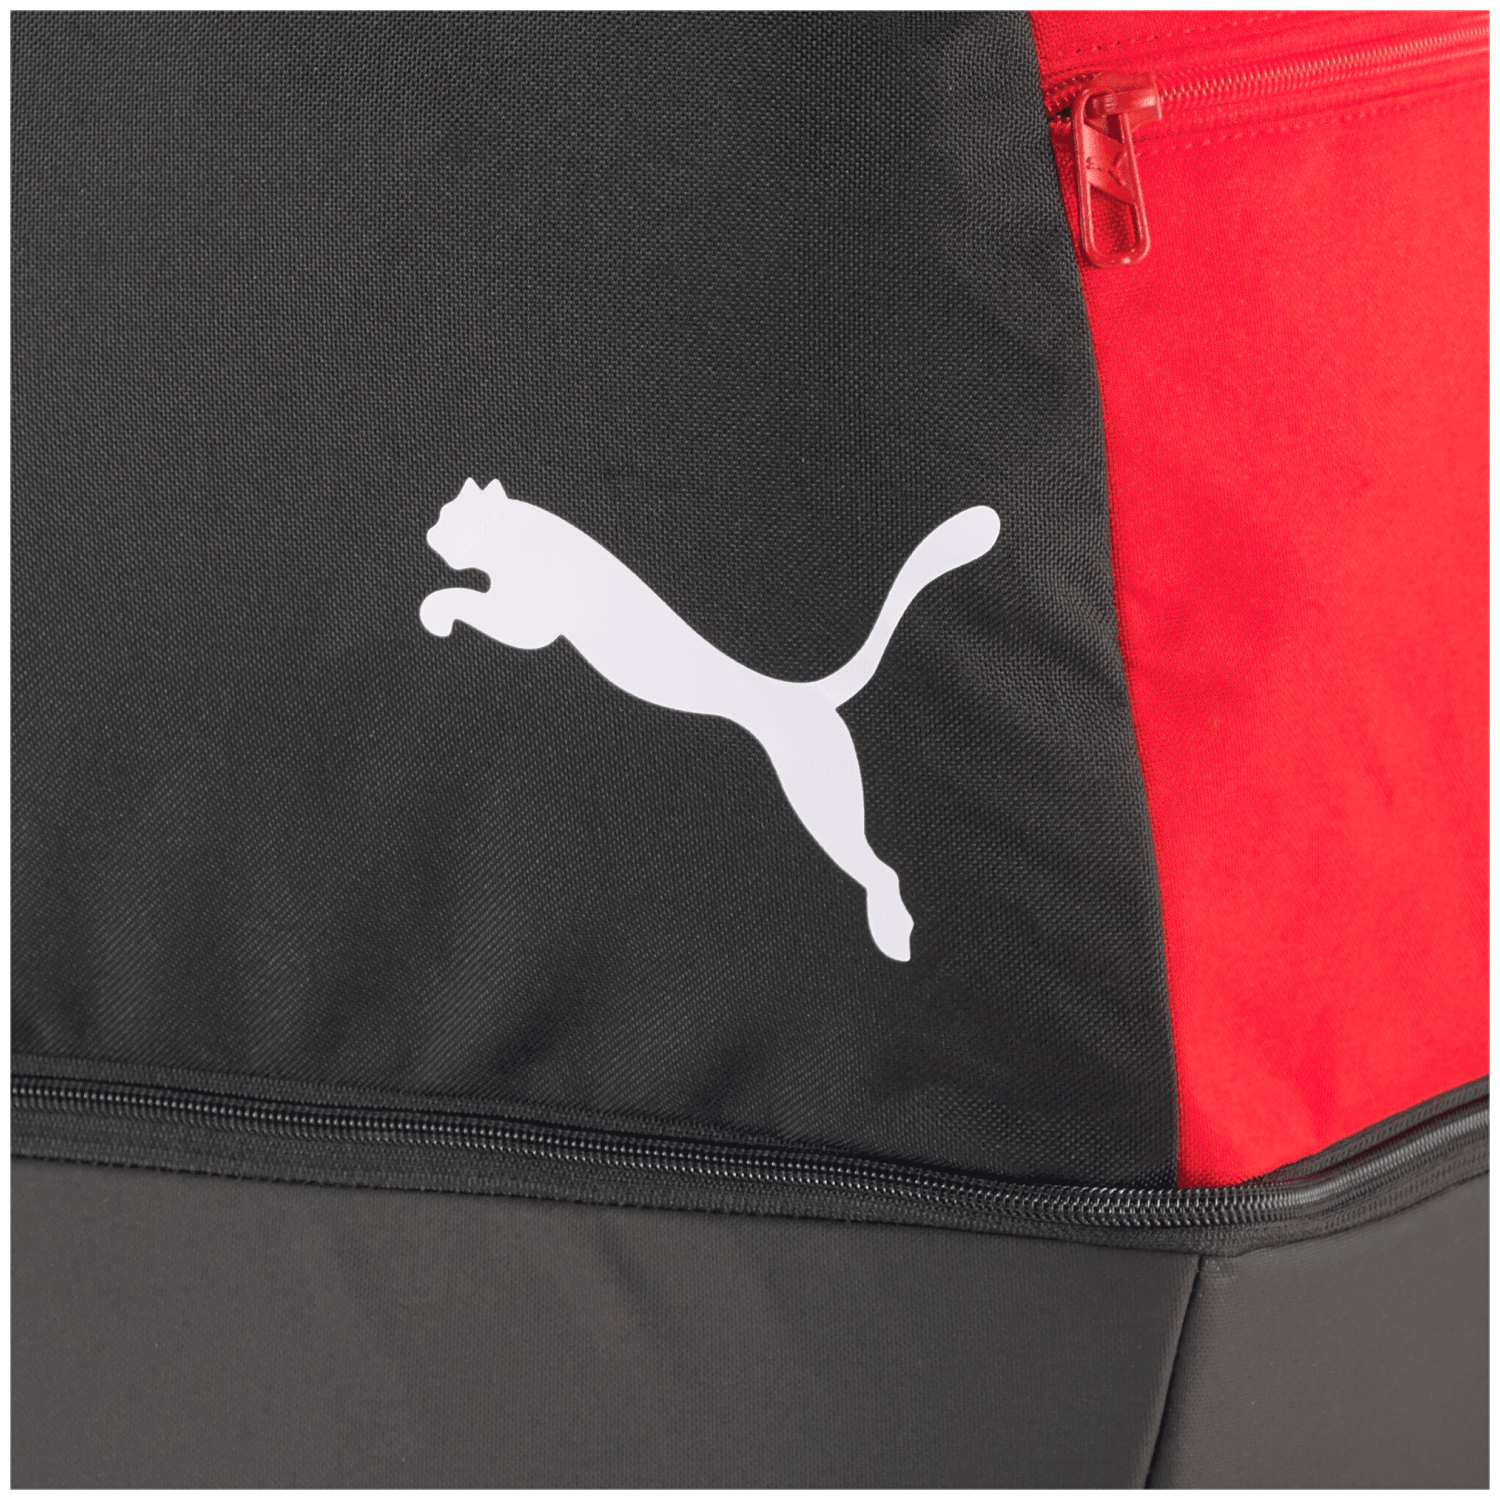 Puma TeamGOAL 23 Teambag M BC (Boot Compartment) Sporttasche